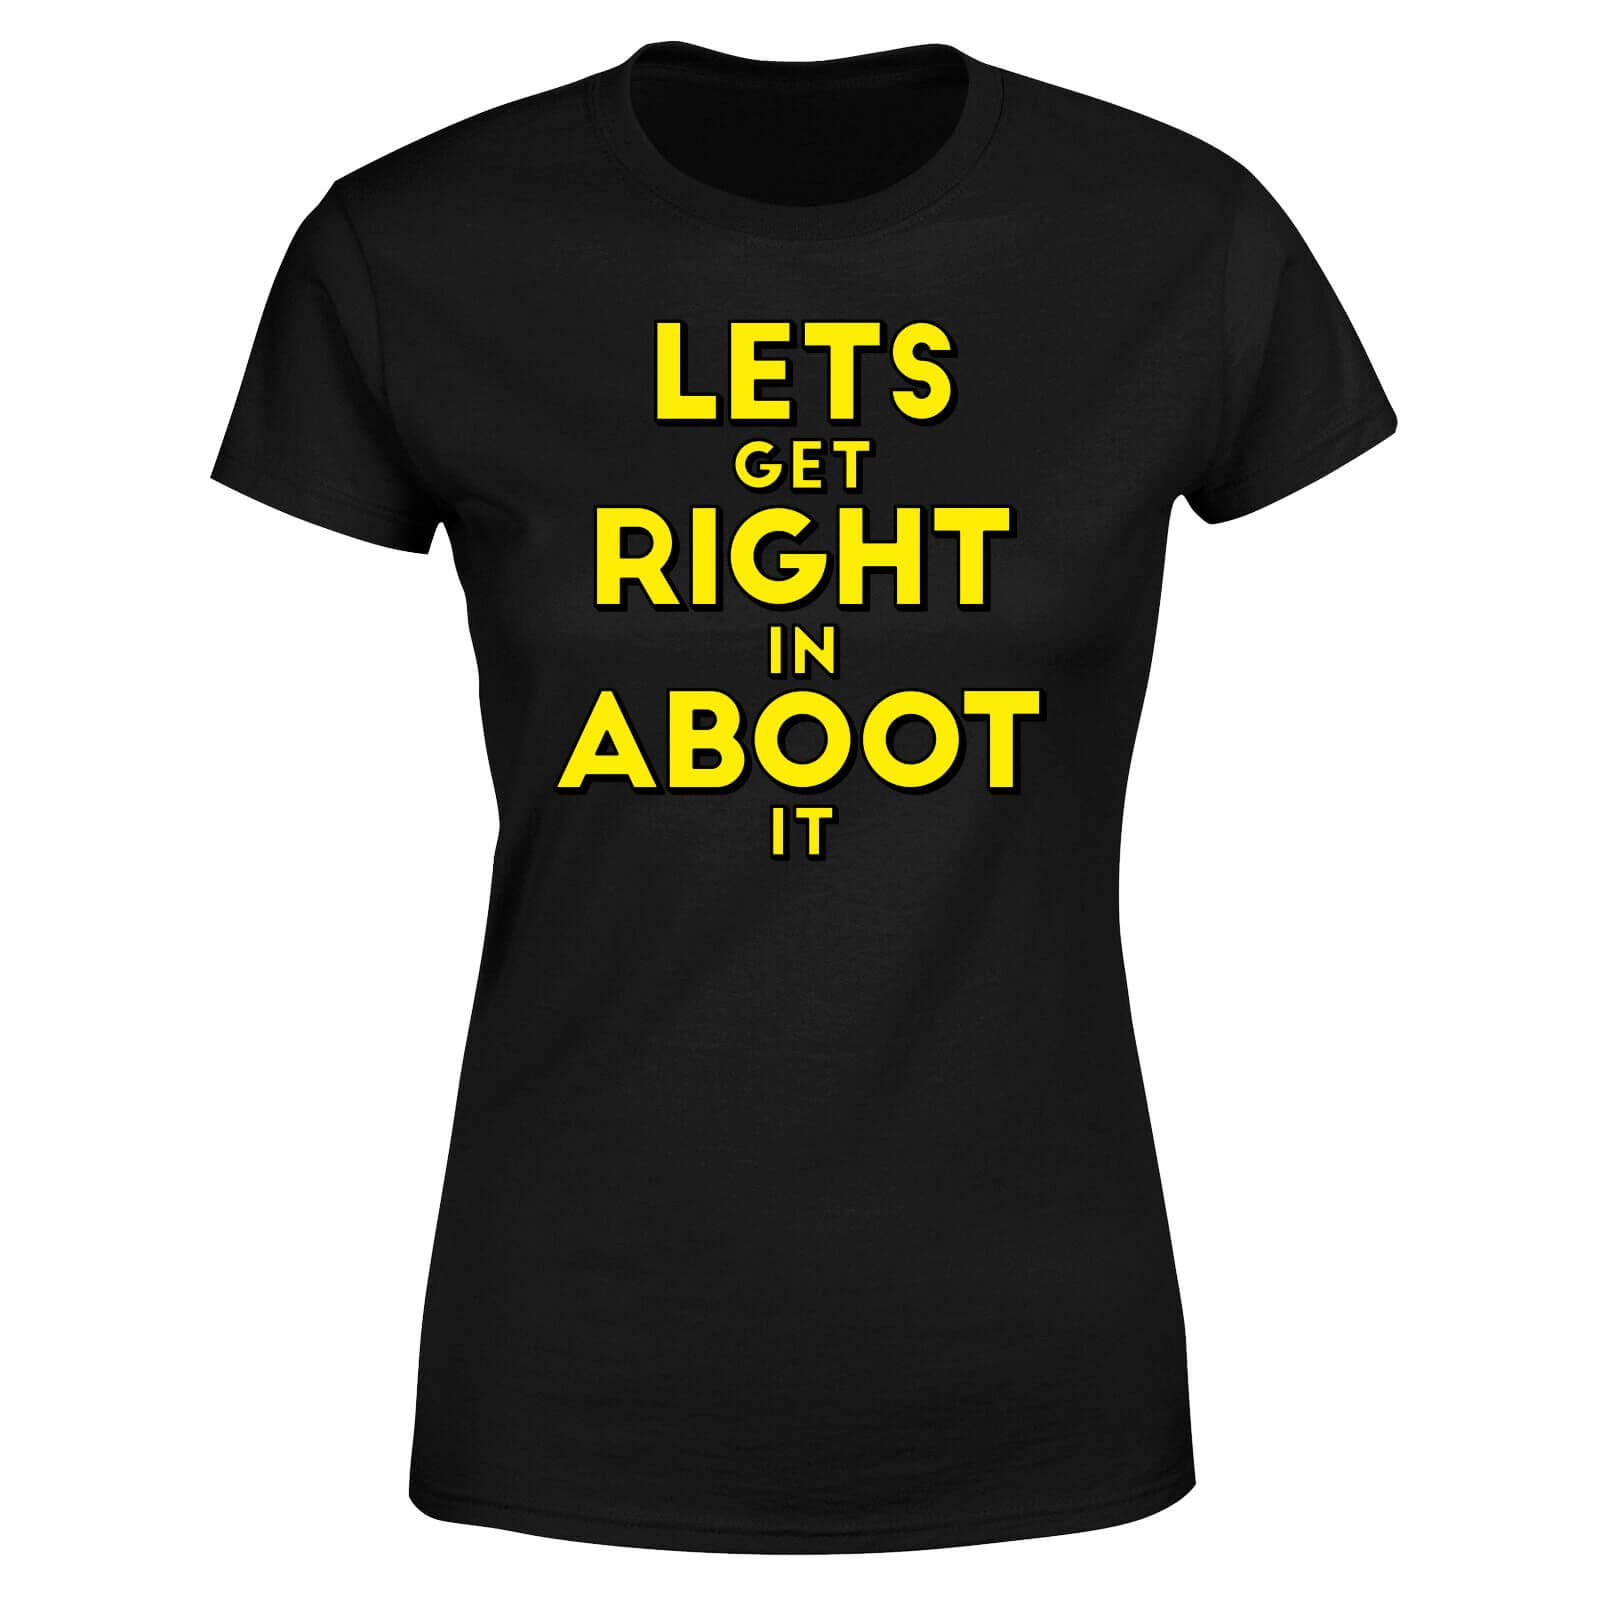 Let's Get Right In Aboot It Women's T-Shirt - Black - 3XL - Black